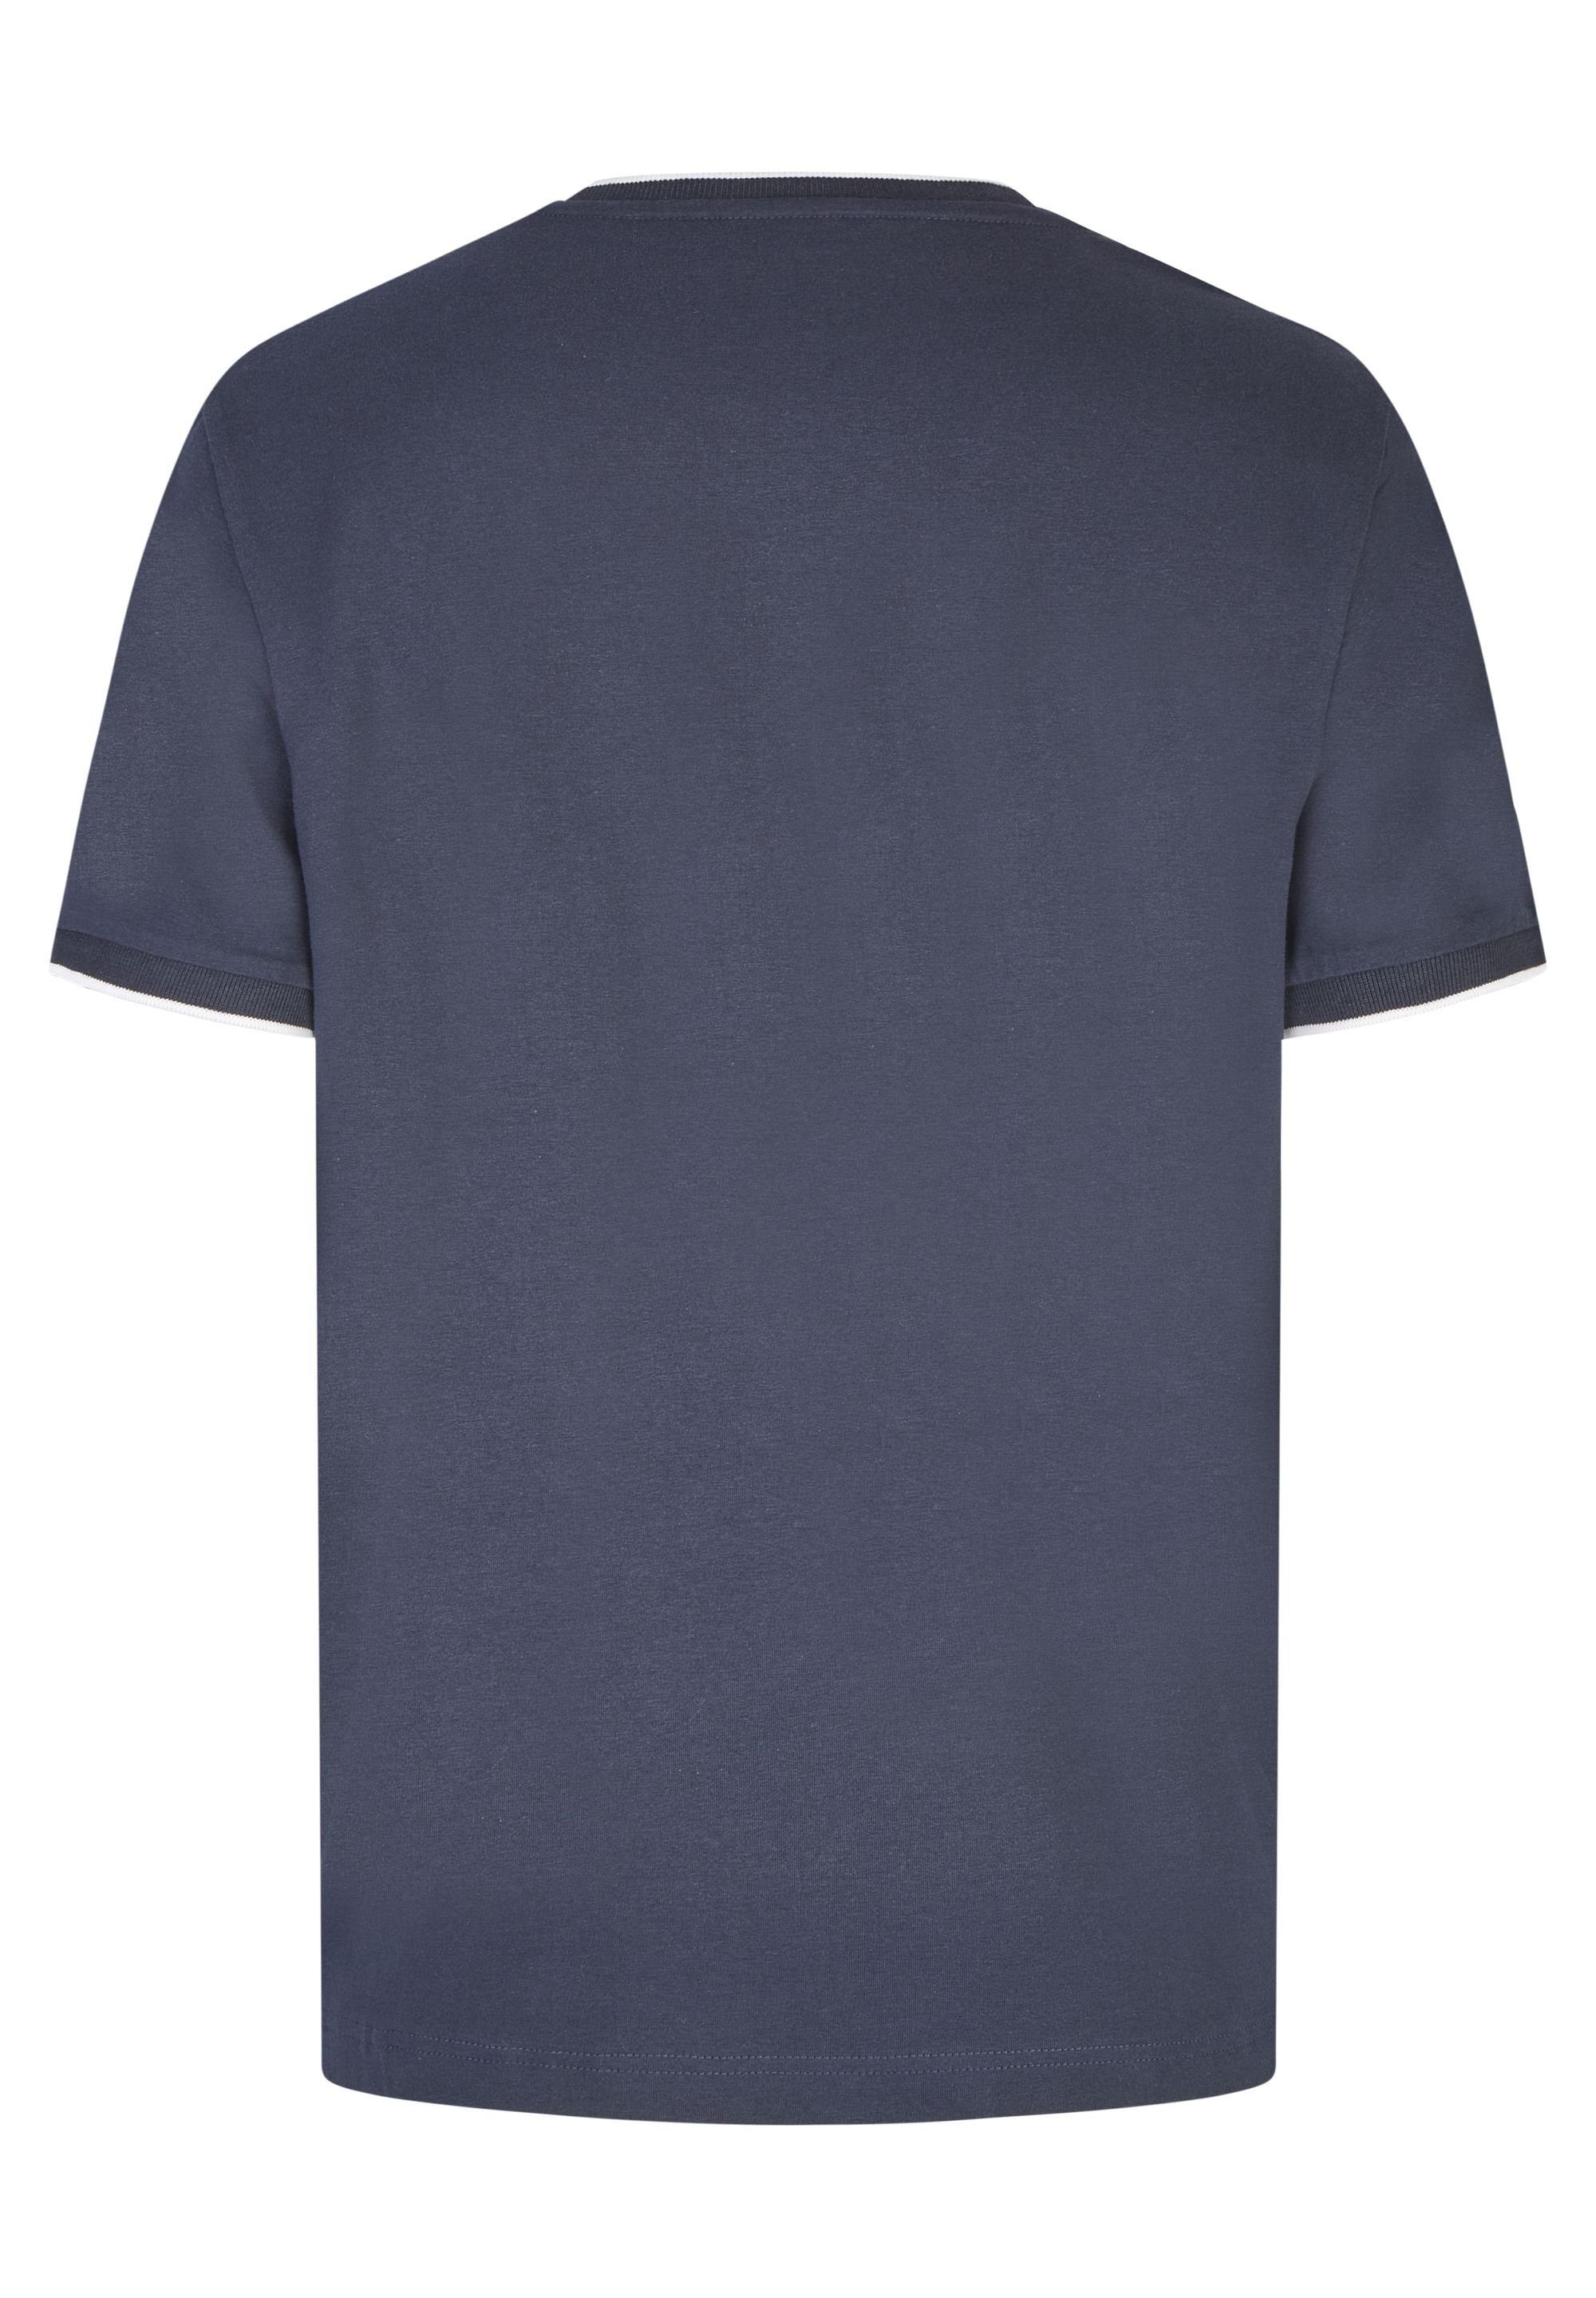 HECHTER PARIS T-Shirt mit midnight Rundhalsausschnitt blue